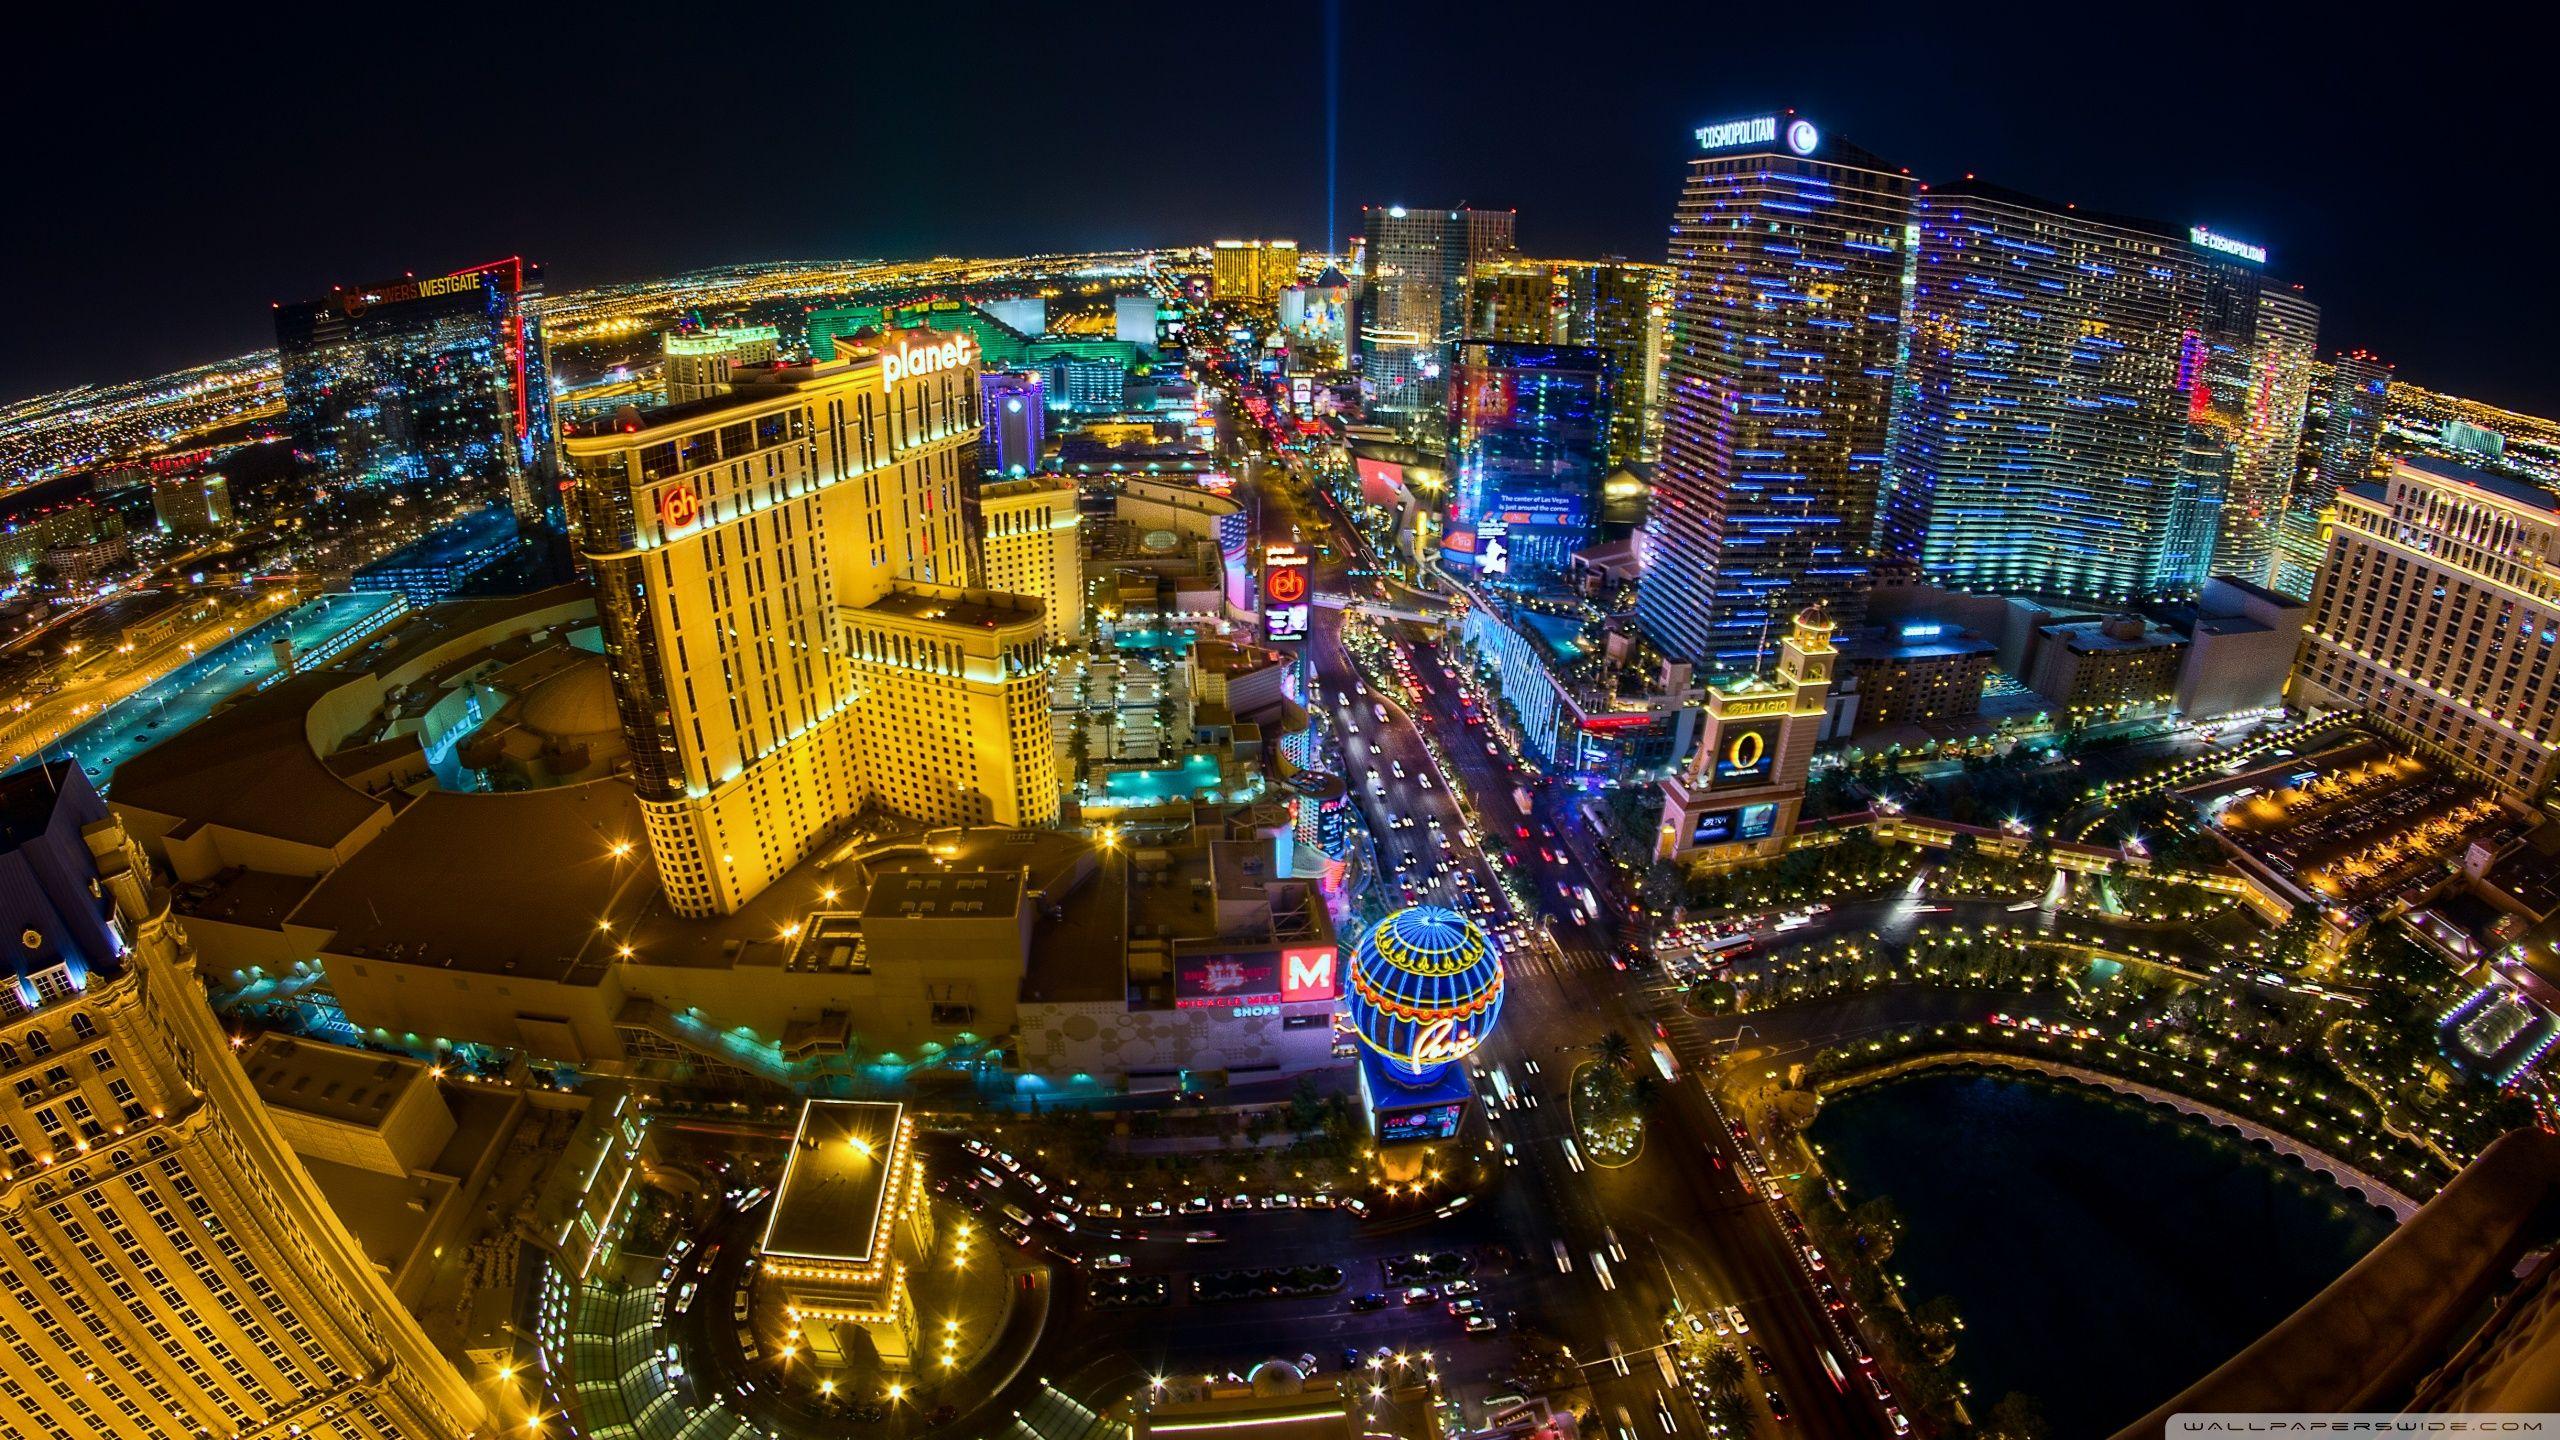 Las Vegas Aerial View HD desktop wallpapers : Widescreen : High